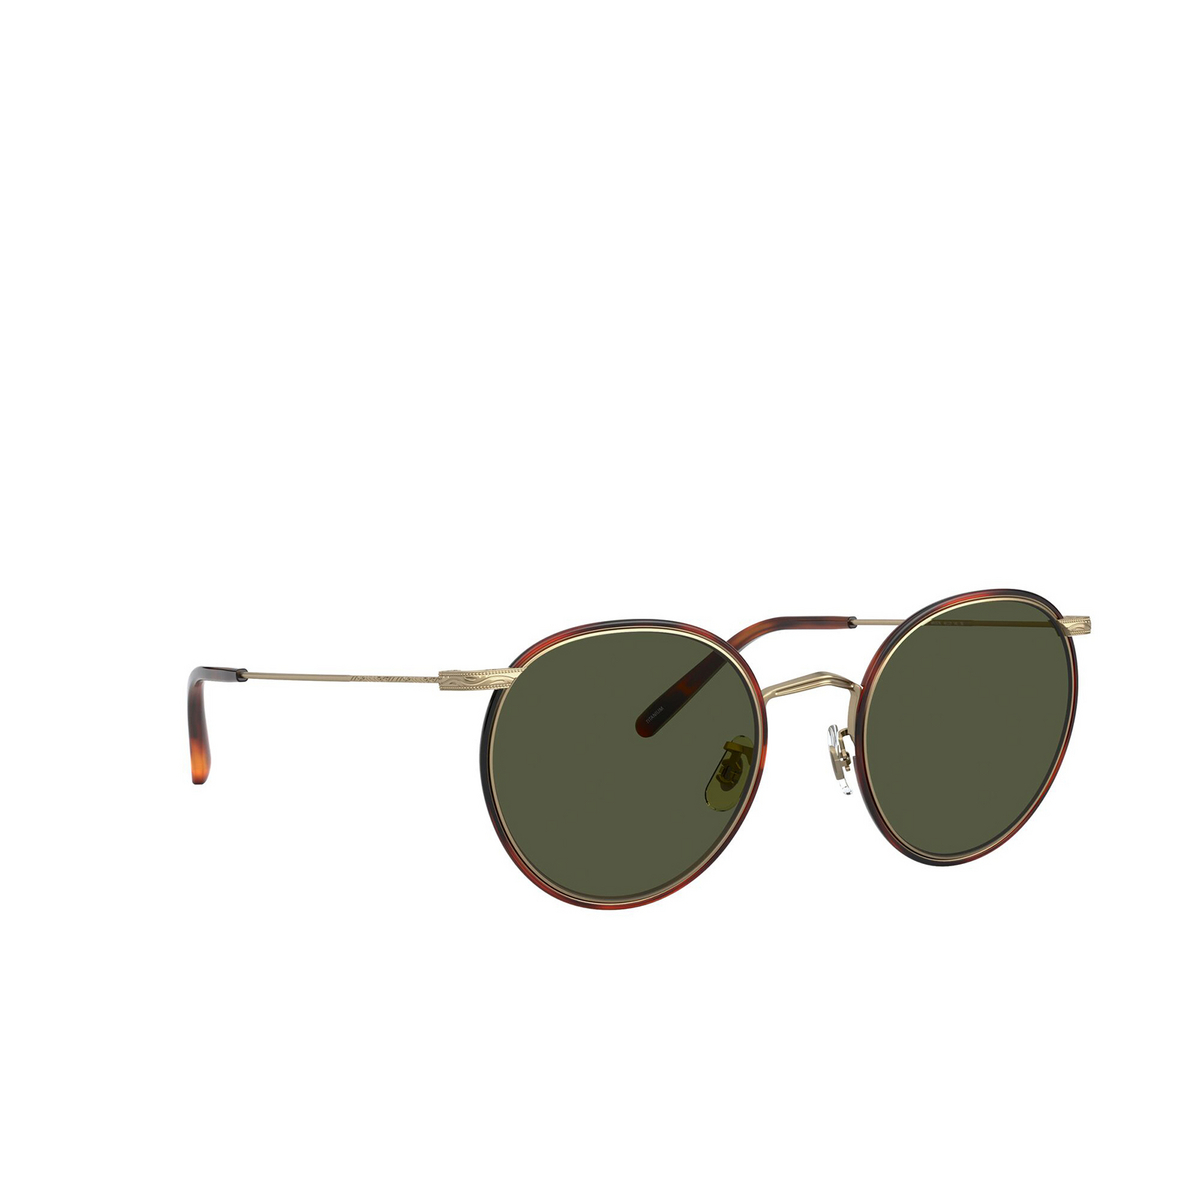 Oliver Peoples® Round Sunglasses: Casson OV1269ST color Antique Gold / Dark Mahogany 528452 - three-quarters view.